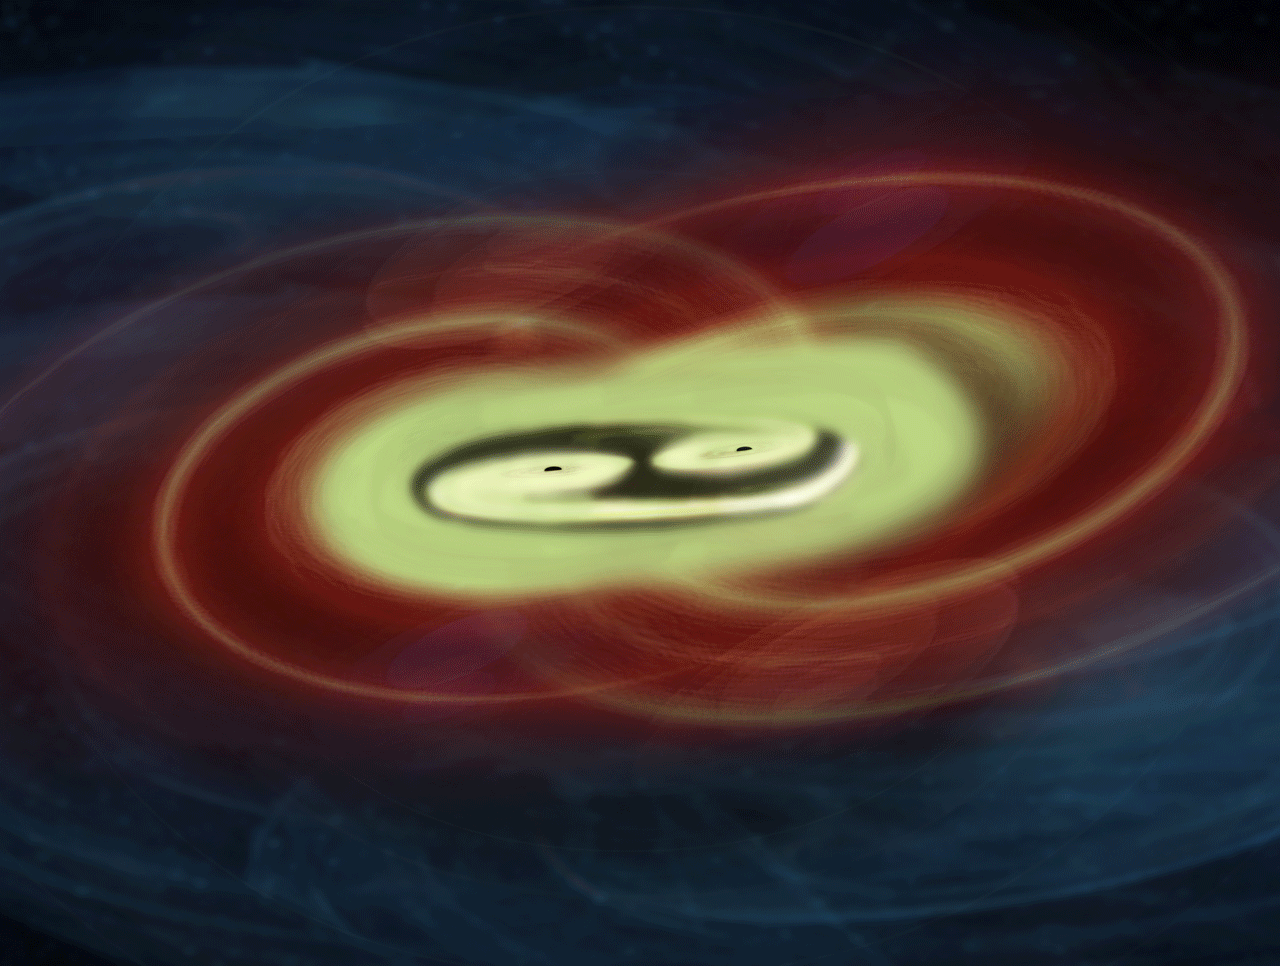 The merger of supermassive black holes